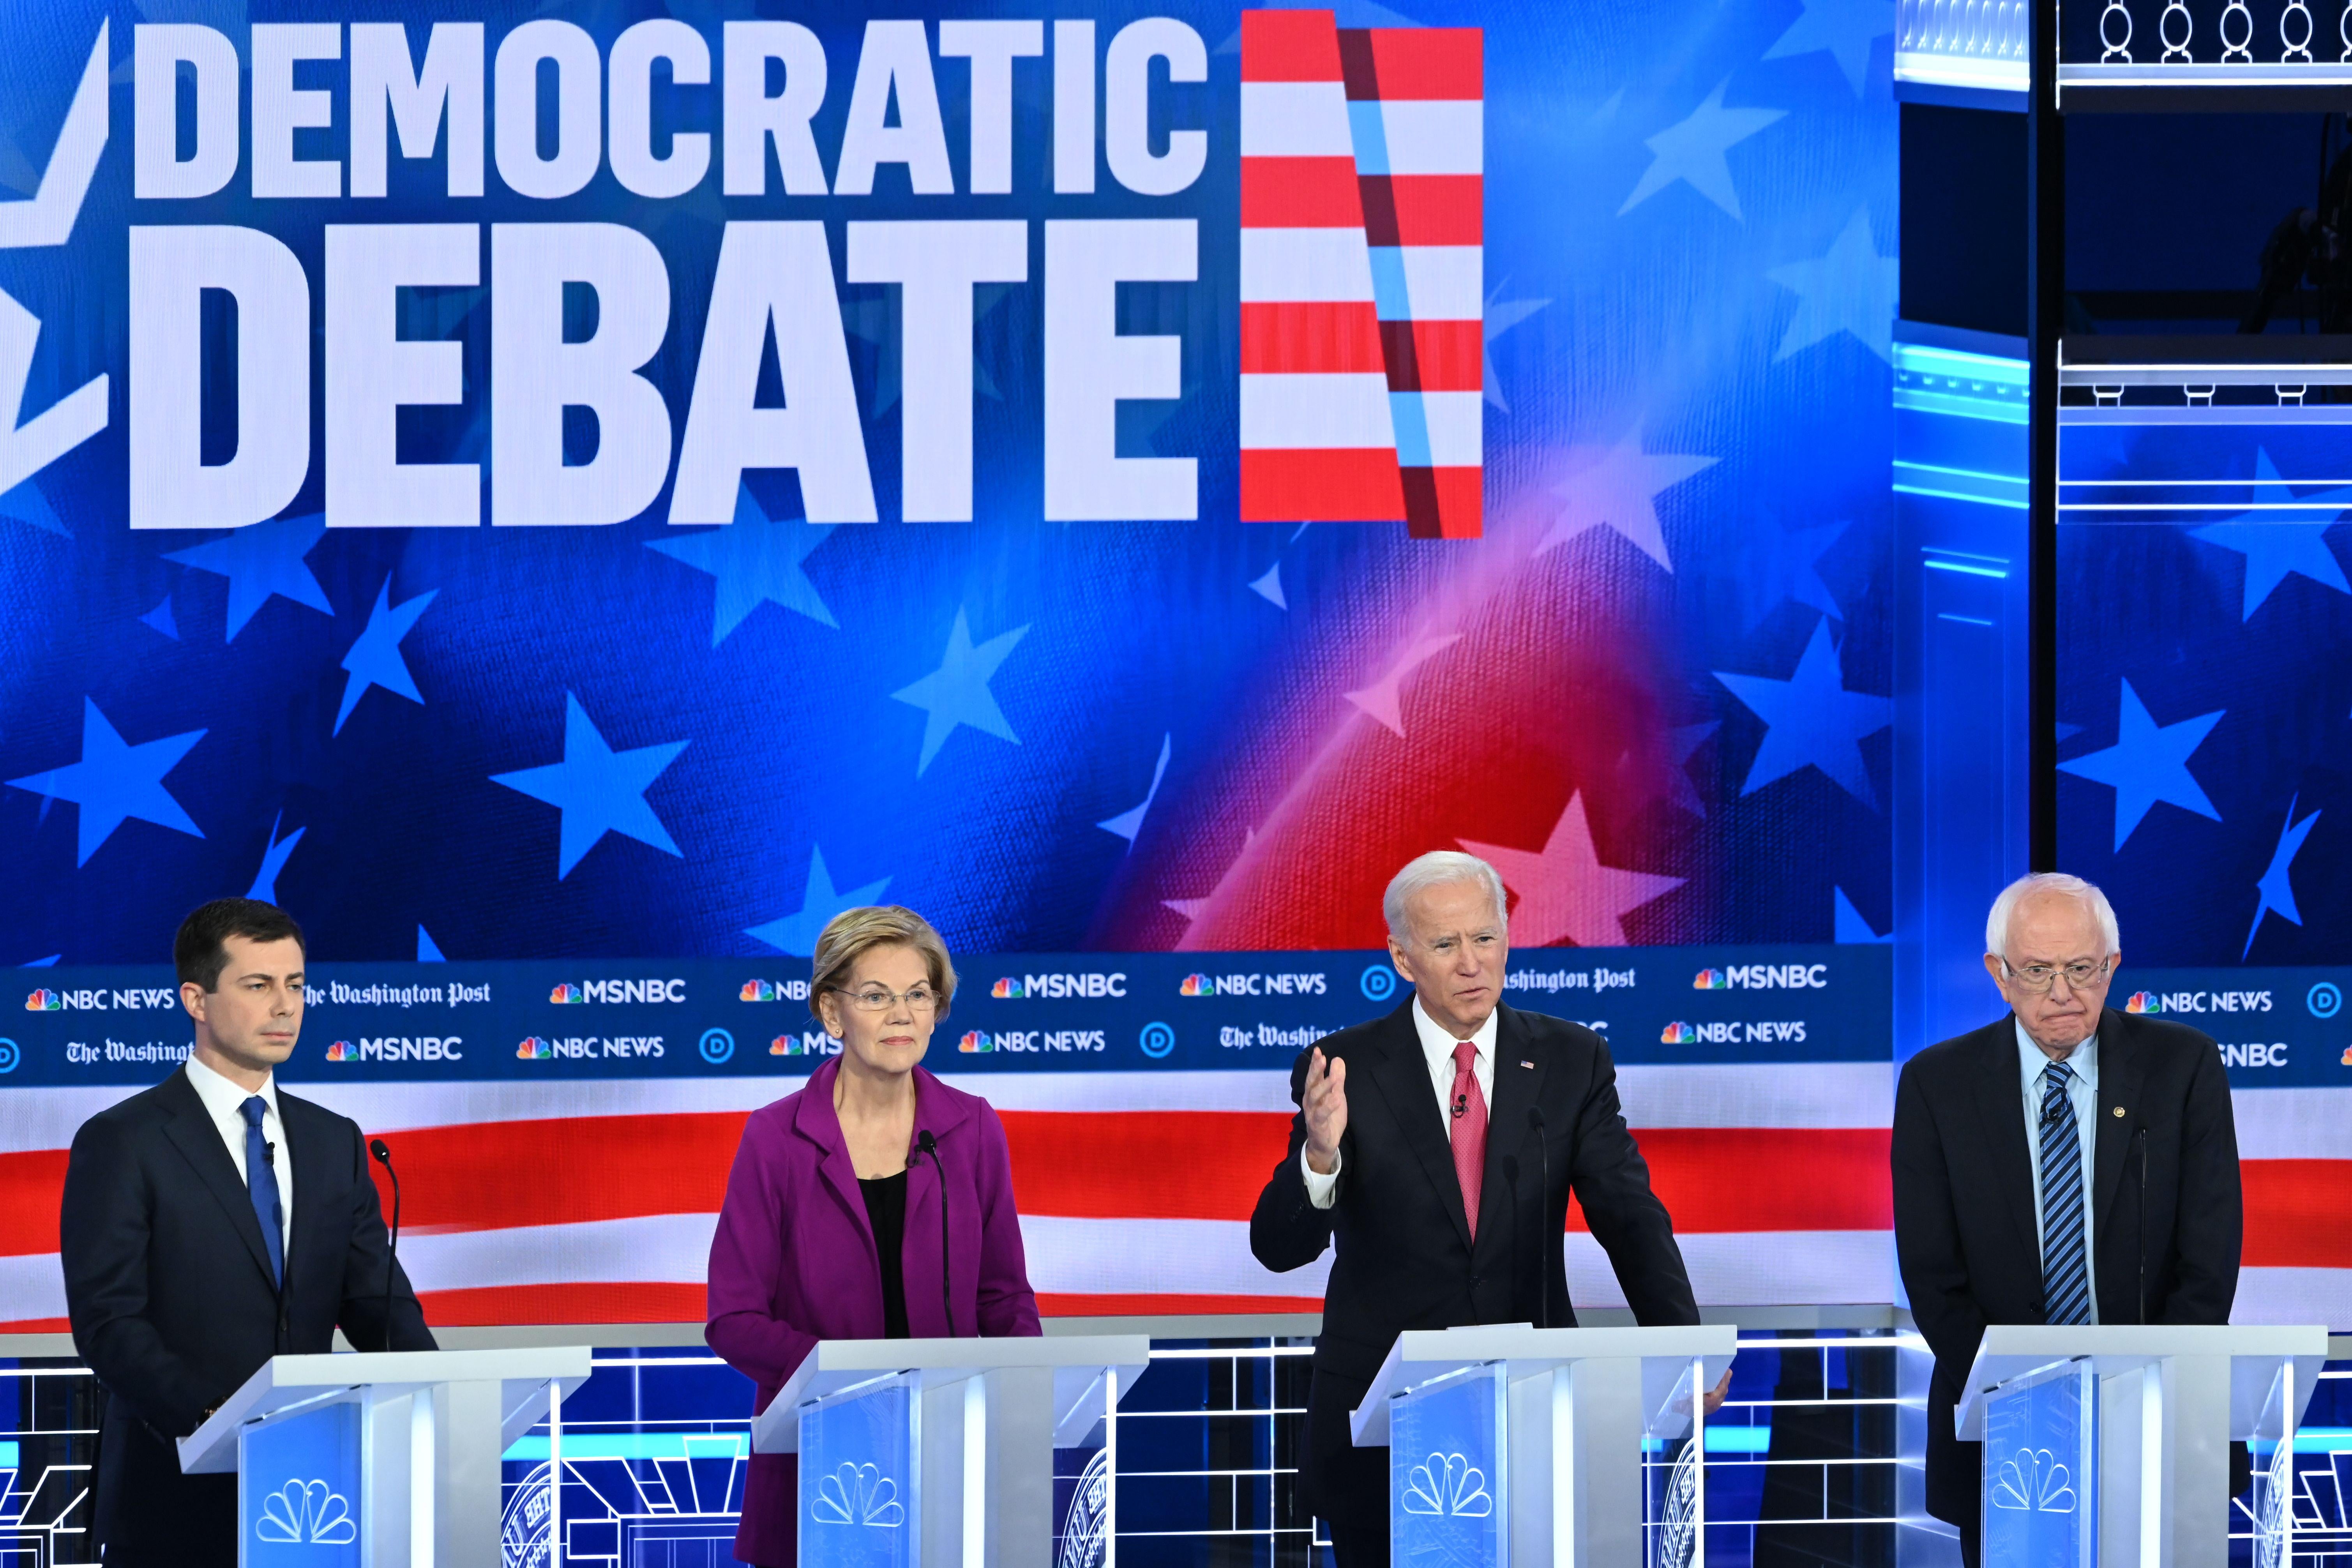 Democratic presidential hopefuls Pete Buttigieg, Elizabeth Warren, Joe Biden, and Bernie Sanders speak during the fifth Democratic primary debate in Atlanta, Georgia on November 20, 2019.